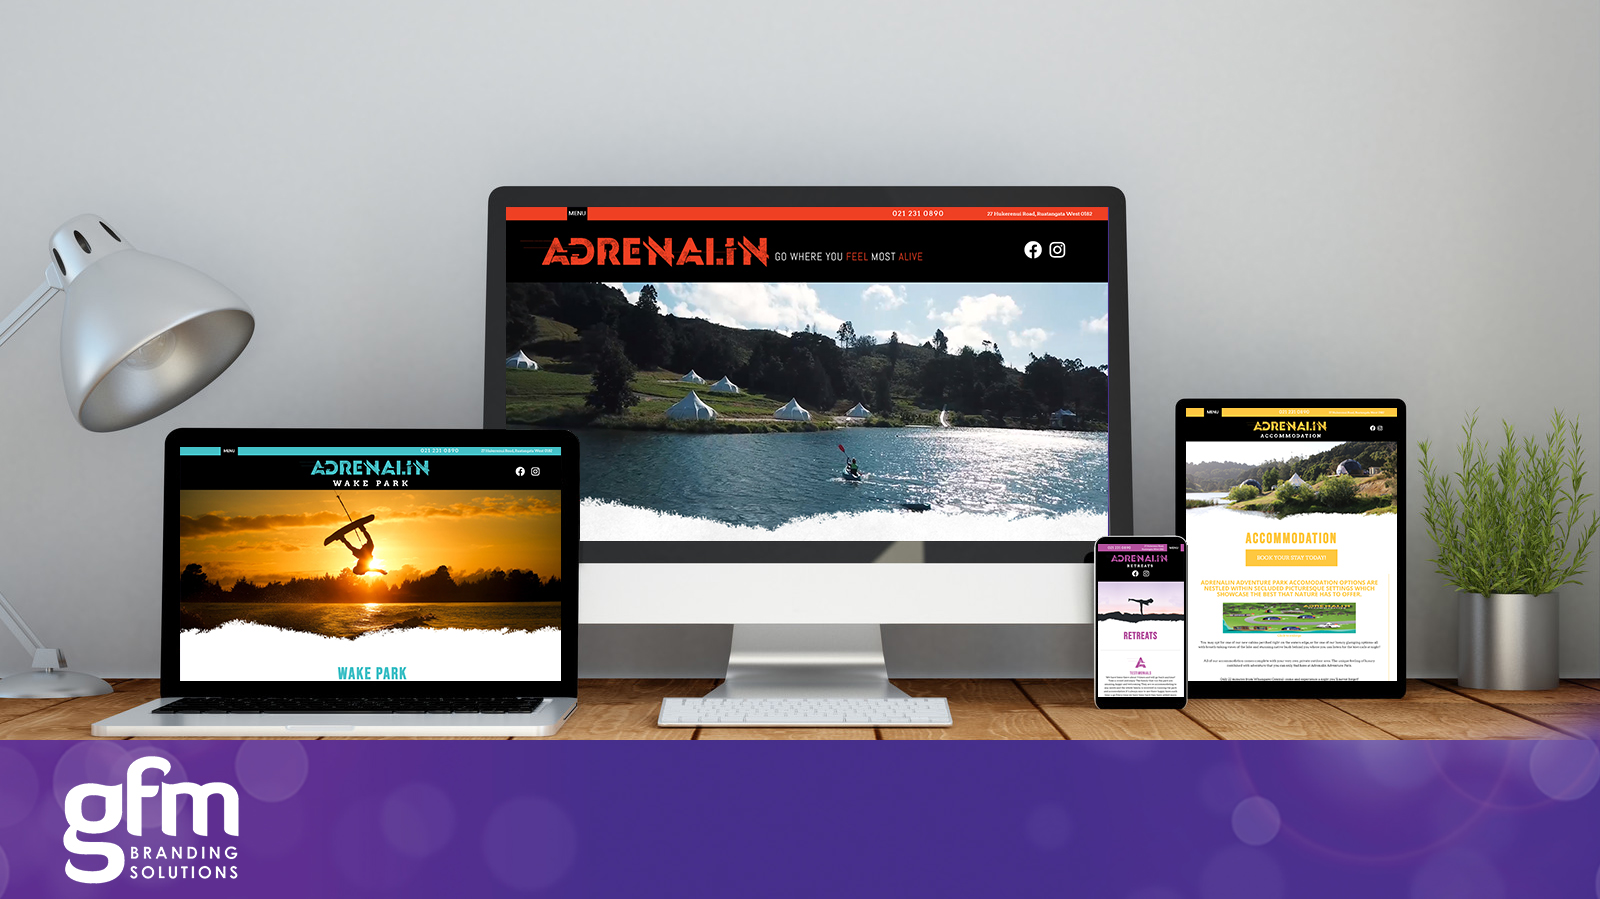 Adrenalin Adventure Park fully responsive website design on multiple screens